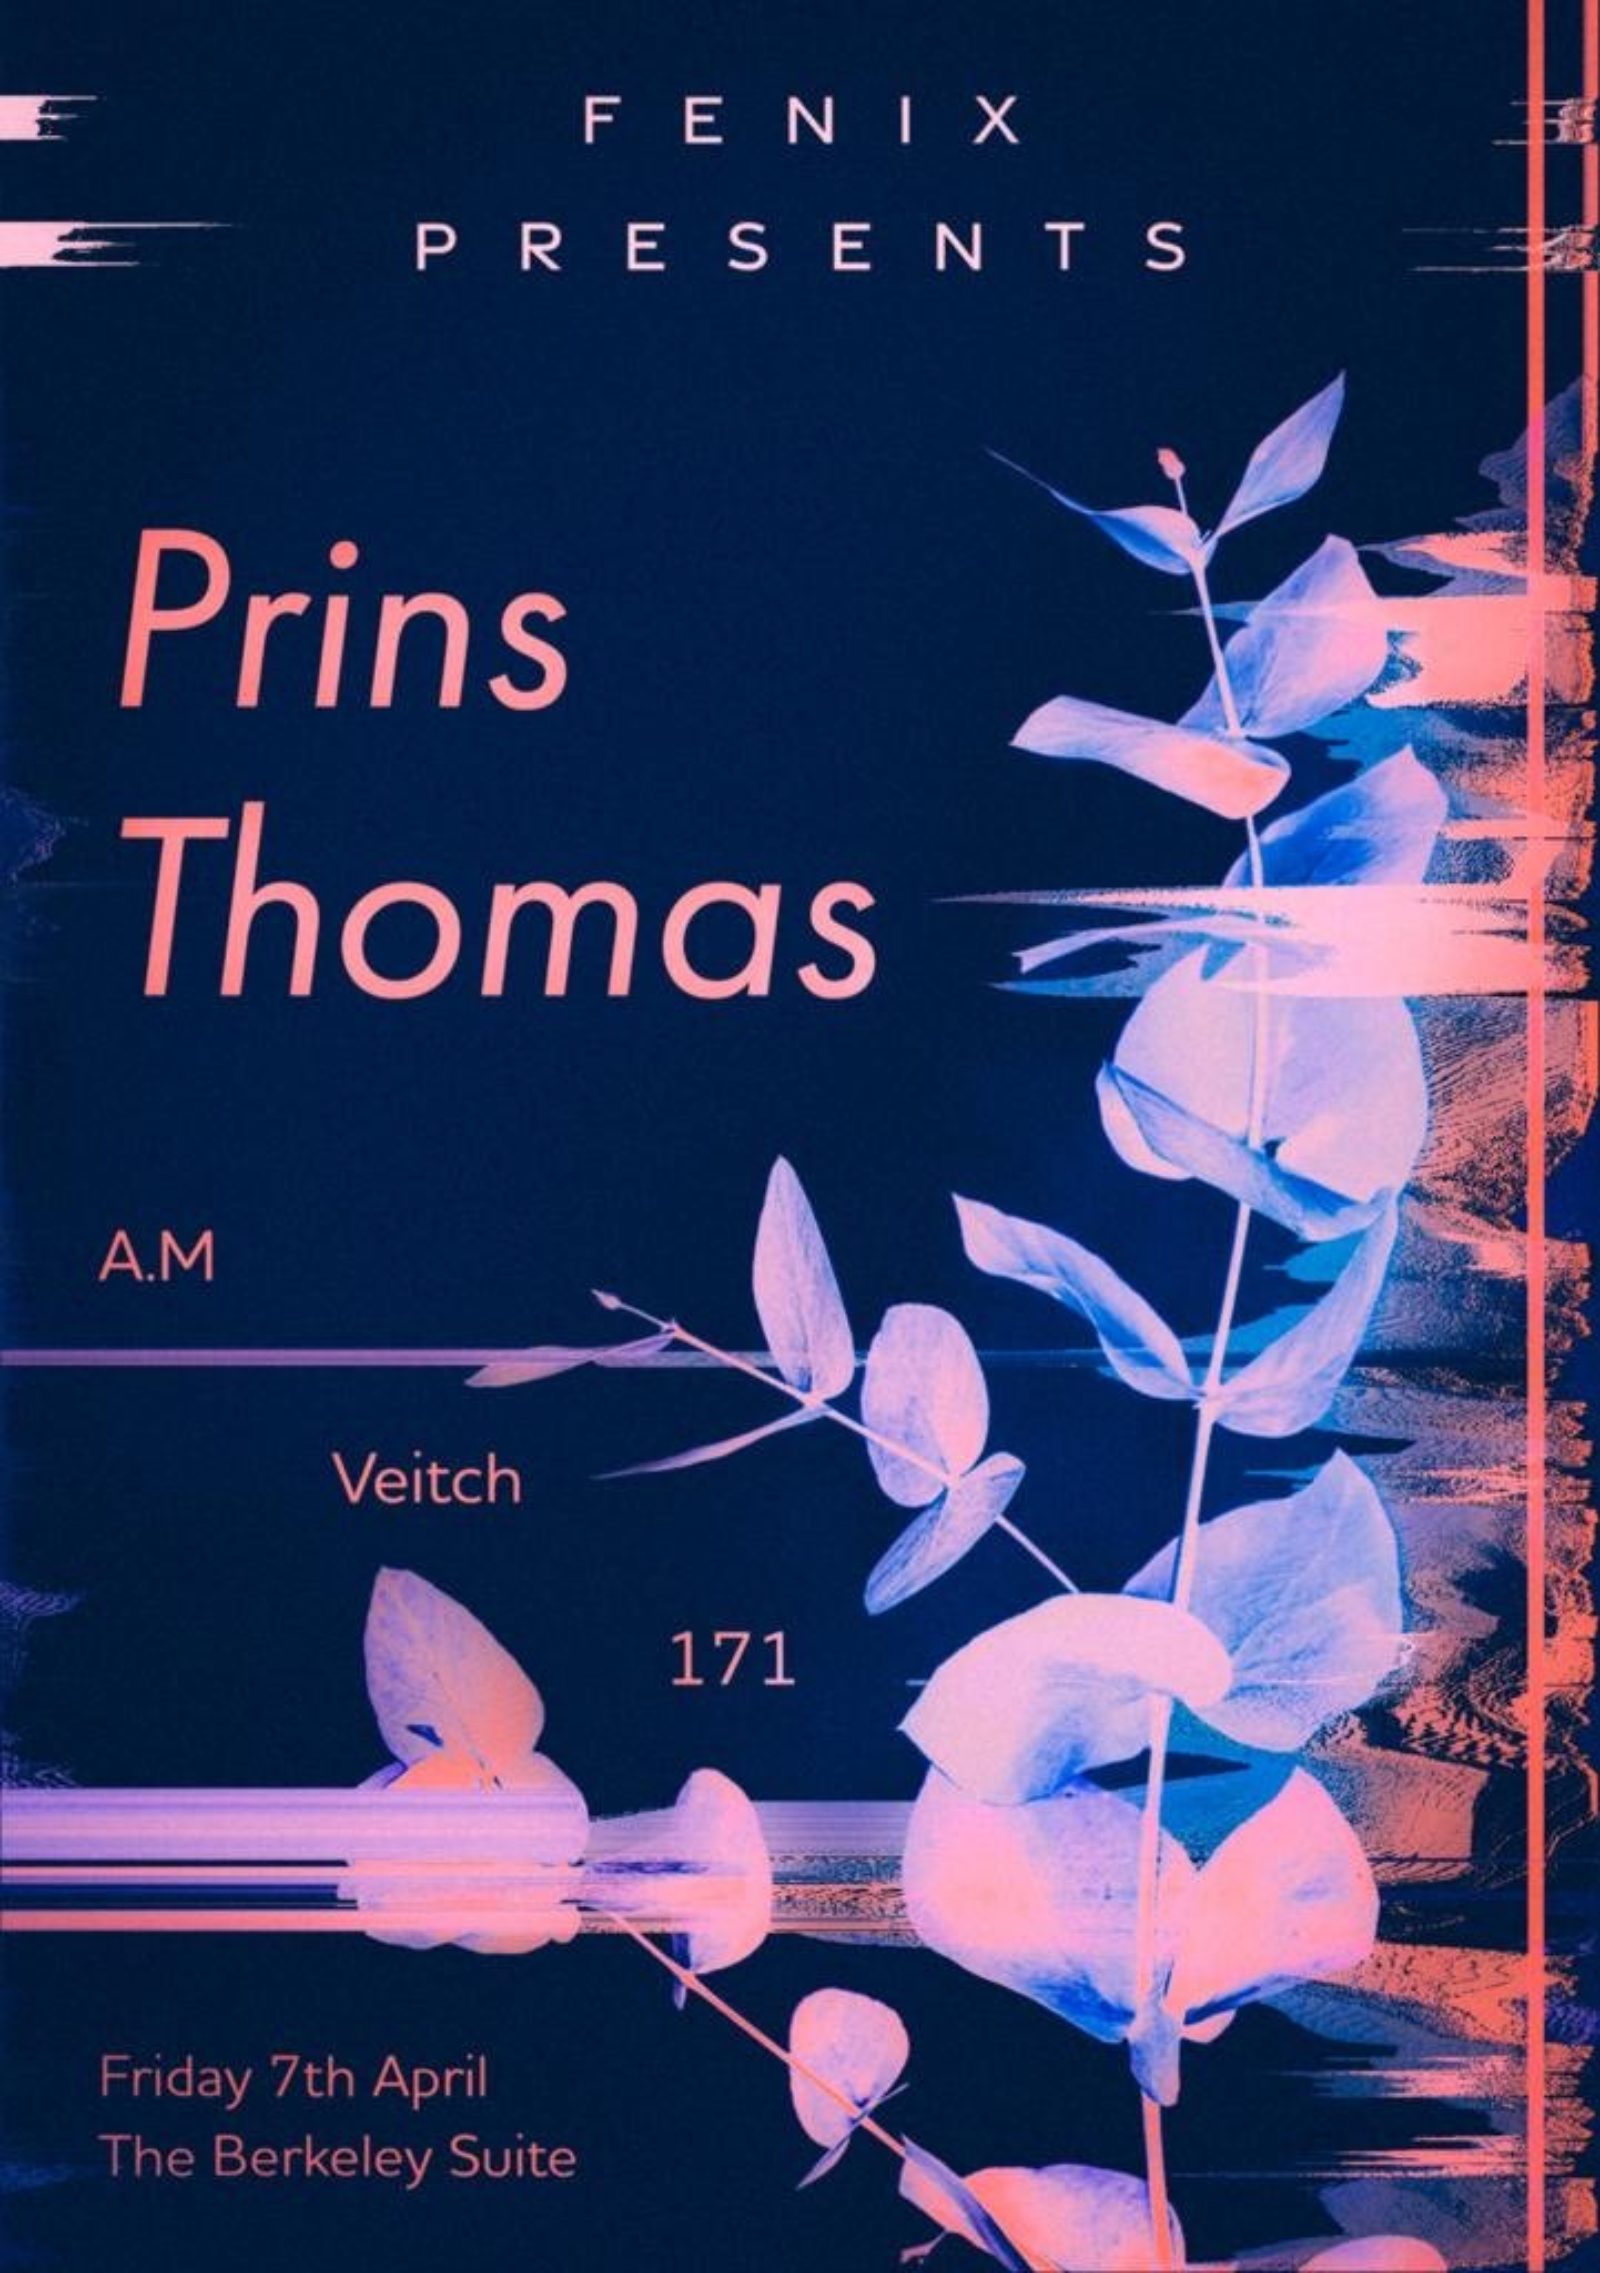 FENIX - PRINS THOMAS